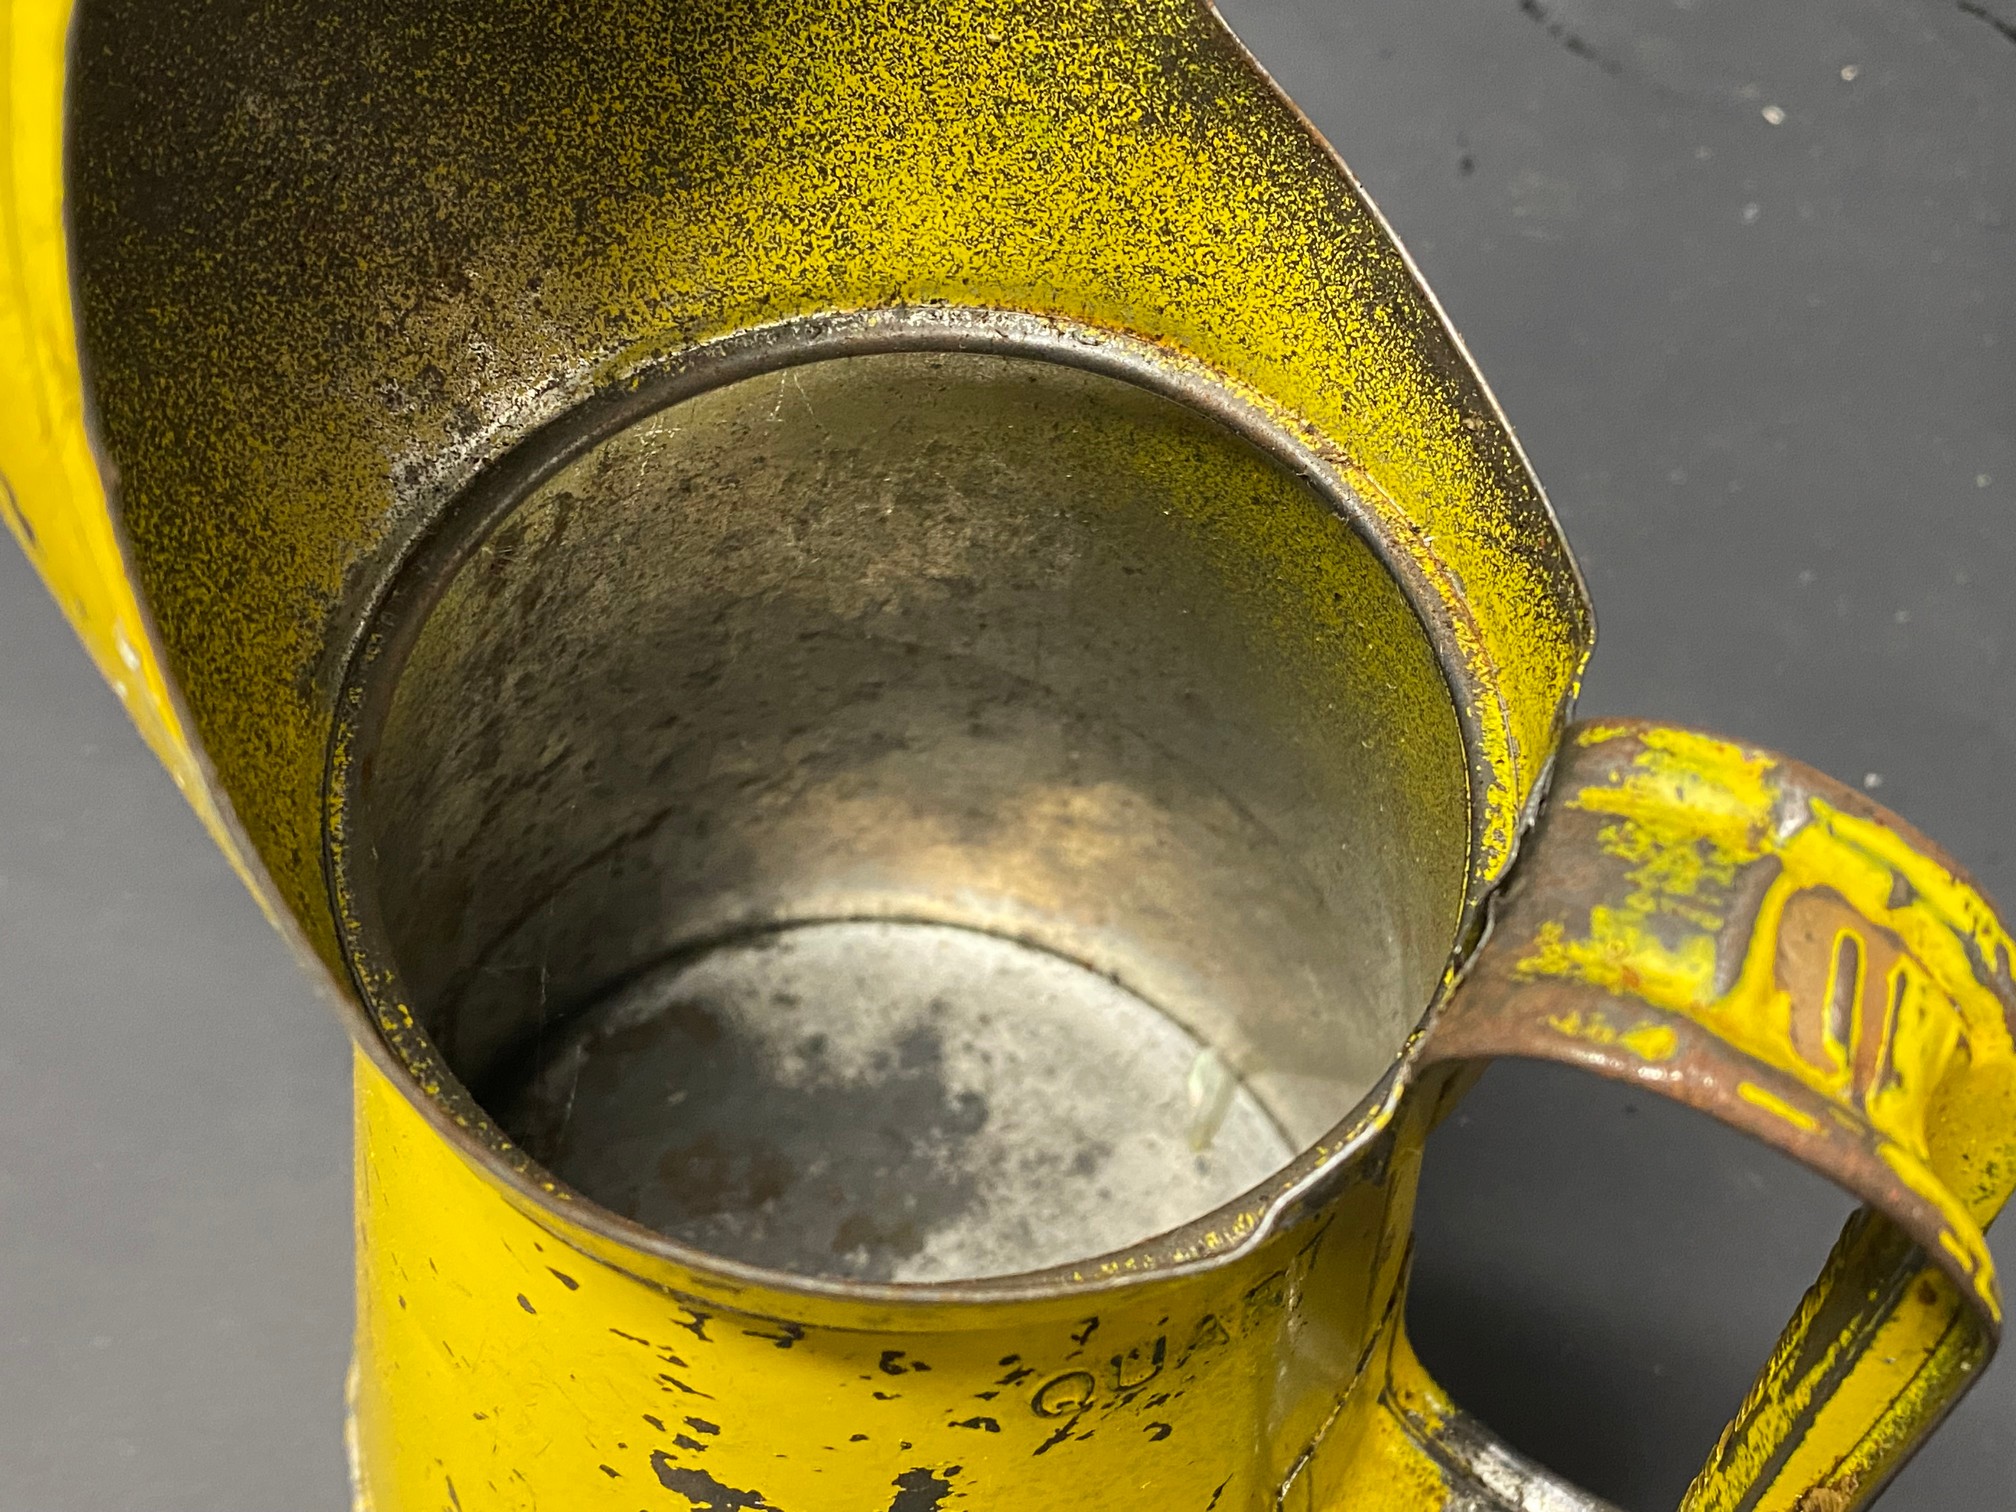 An Esso Golden quart oil measure. - Image 4 of 5